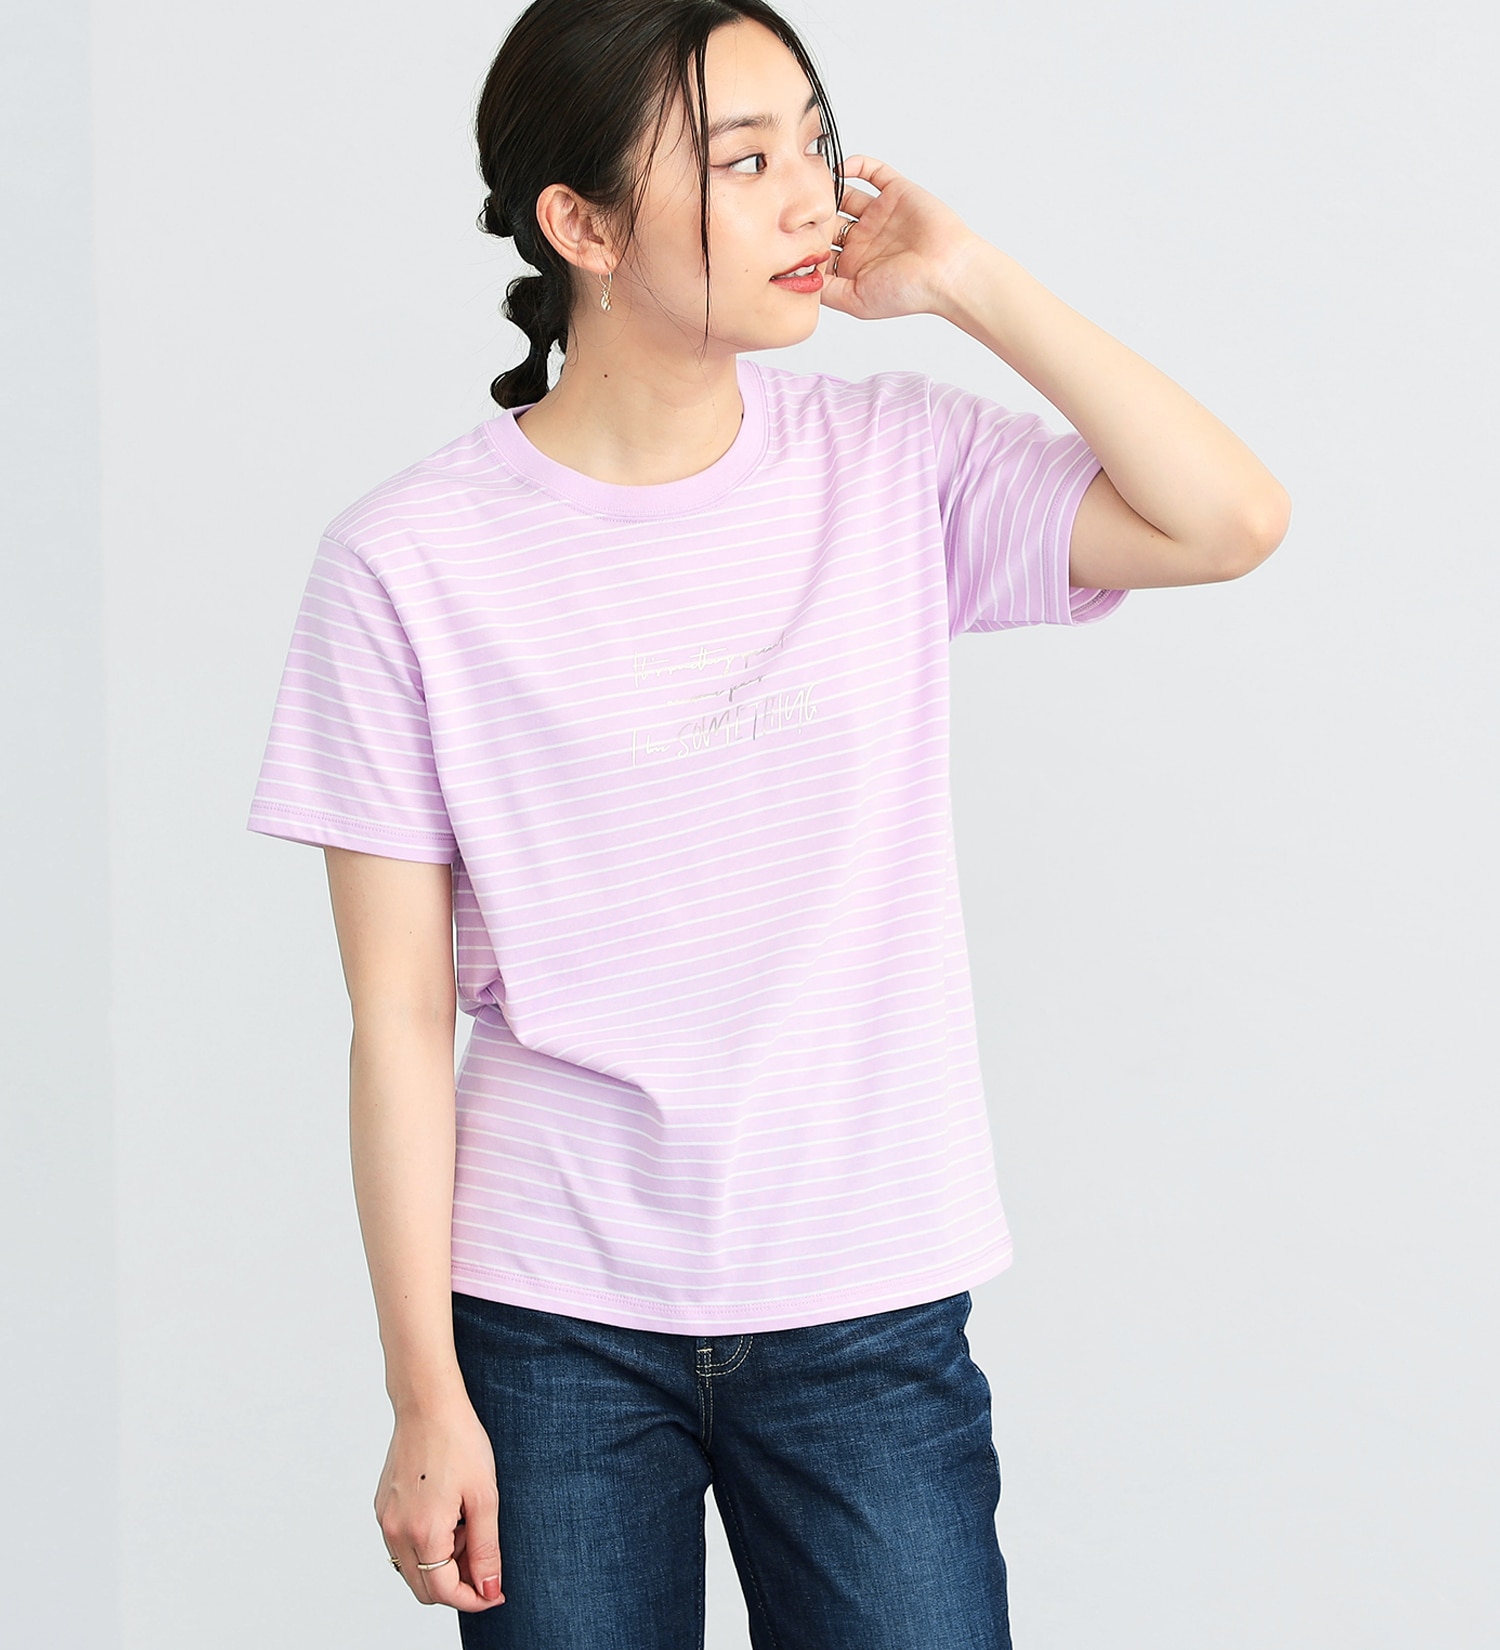 SOMETHING(サムシング)の【試着対象】SOMETHING シャイニープリント半袖Tシャツ|トップス/Tシャツ/カットソー/レディース|ピンク